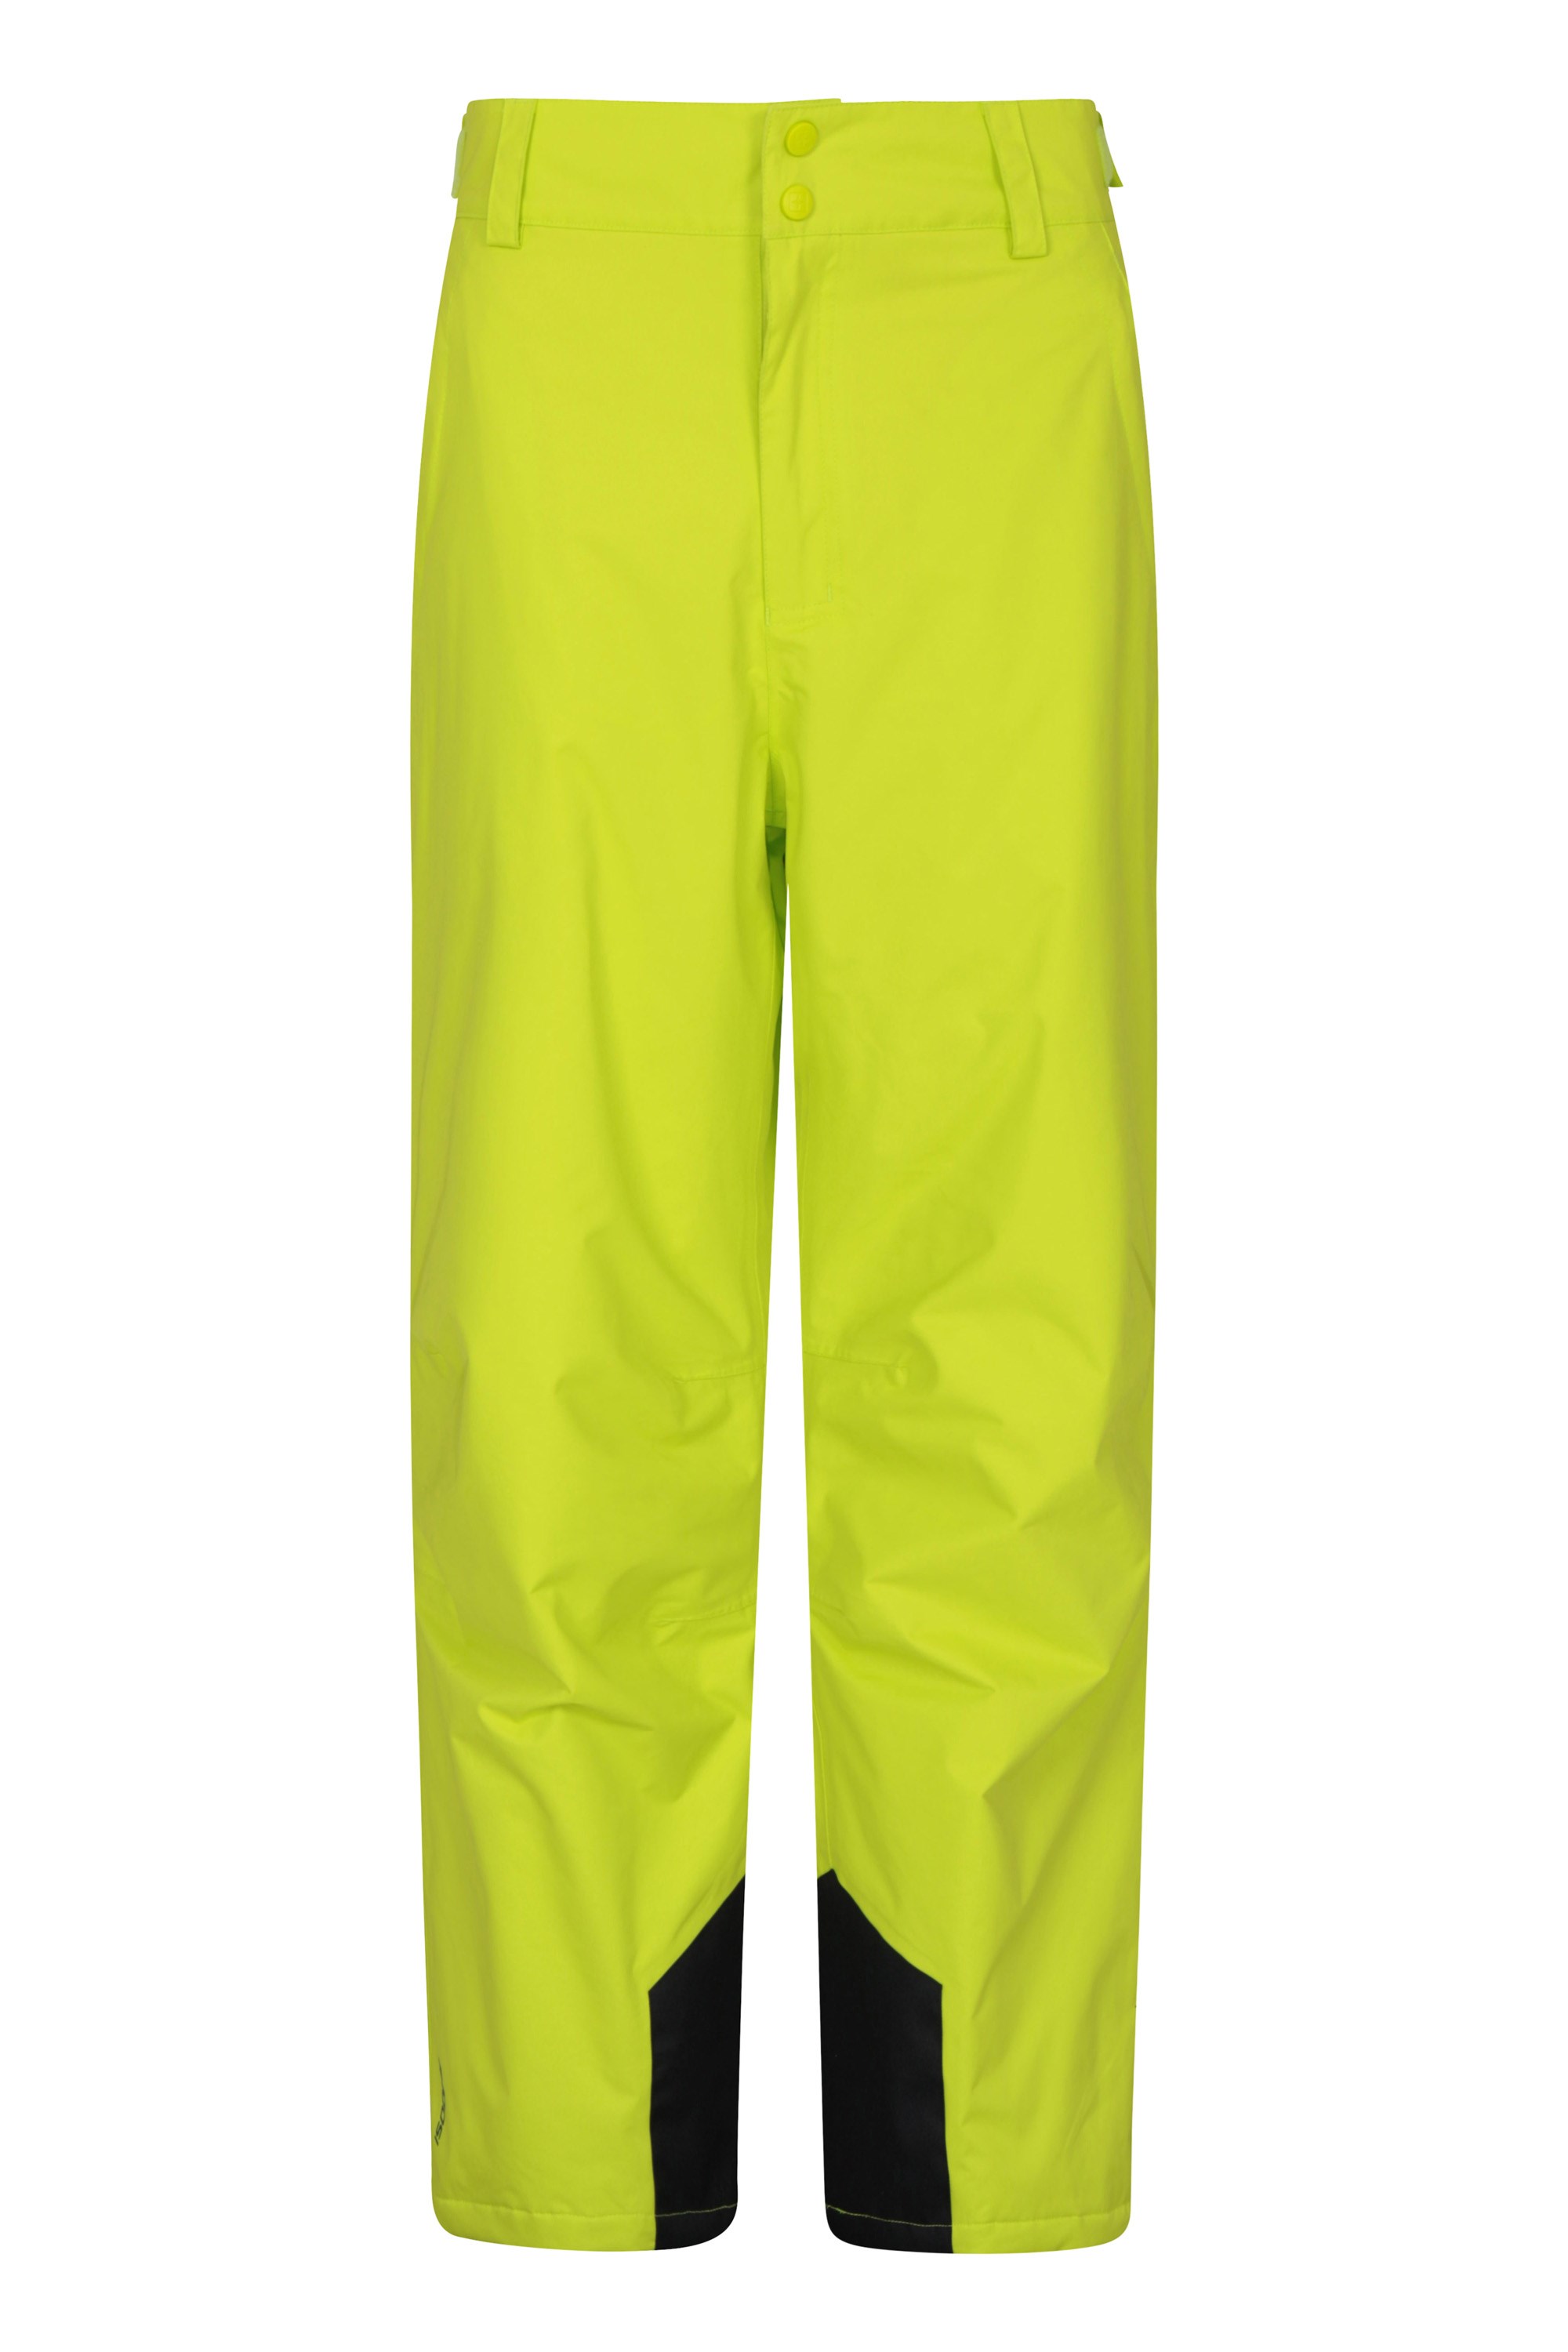 Gravity Mens Ski Pants - Green